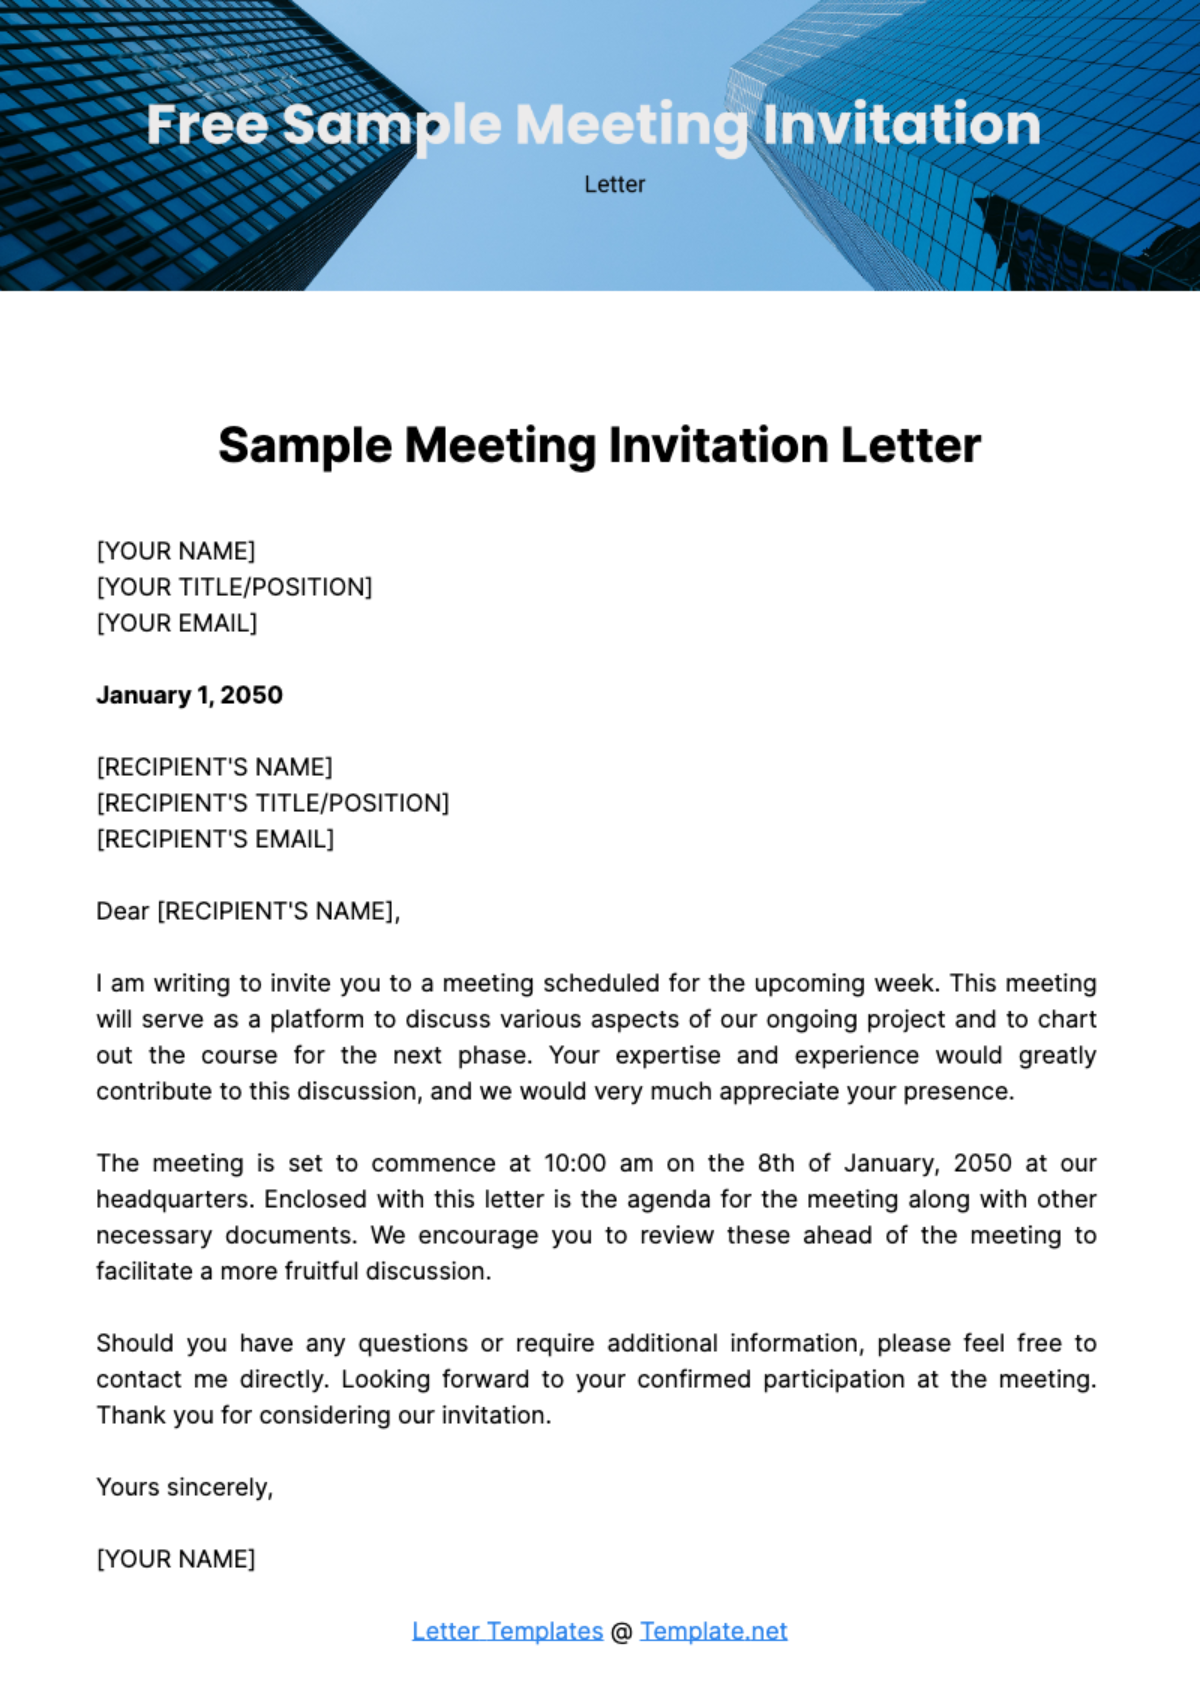 Free Sample Meeting Invitation Letter Template